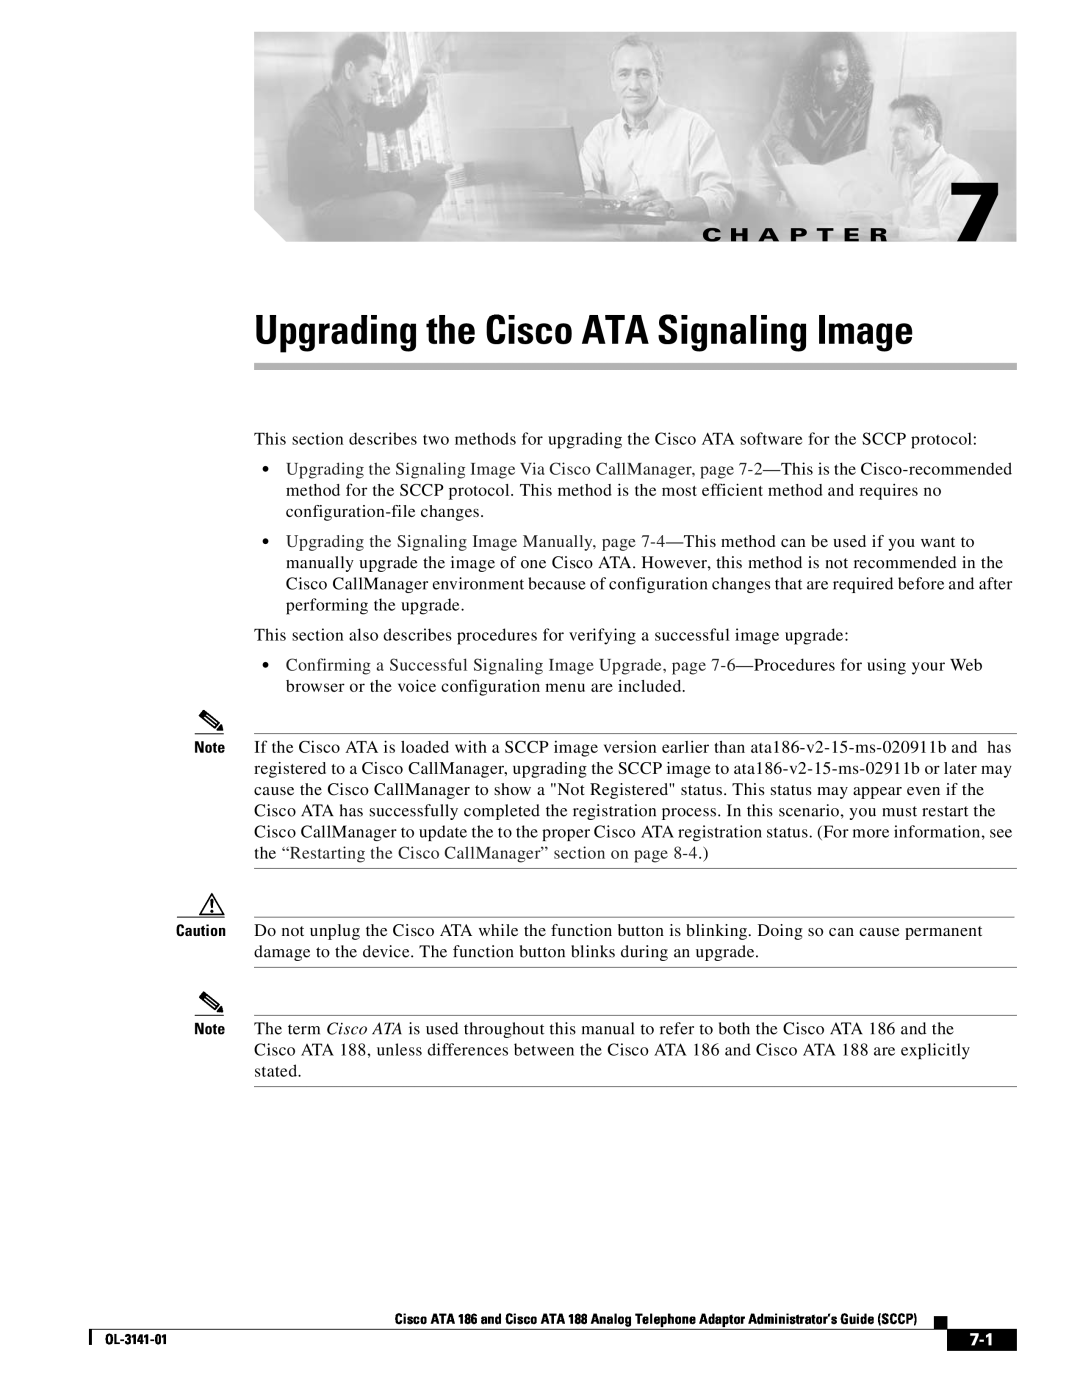 Cisco Systems ATA 188, ATA 186 manual Upgrading the Cisco ATA Signaling Image, C H A P T E R 